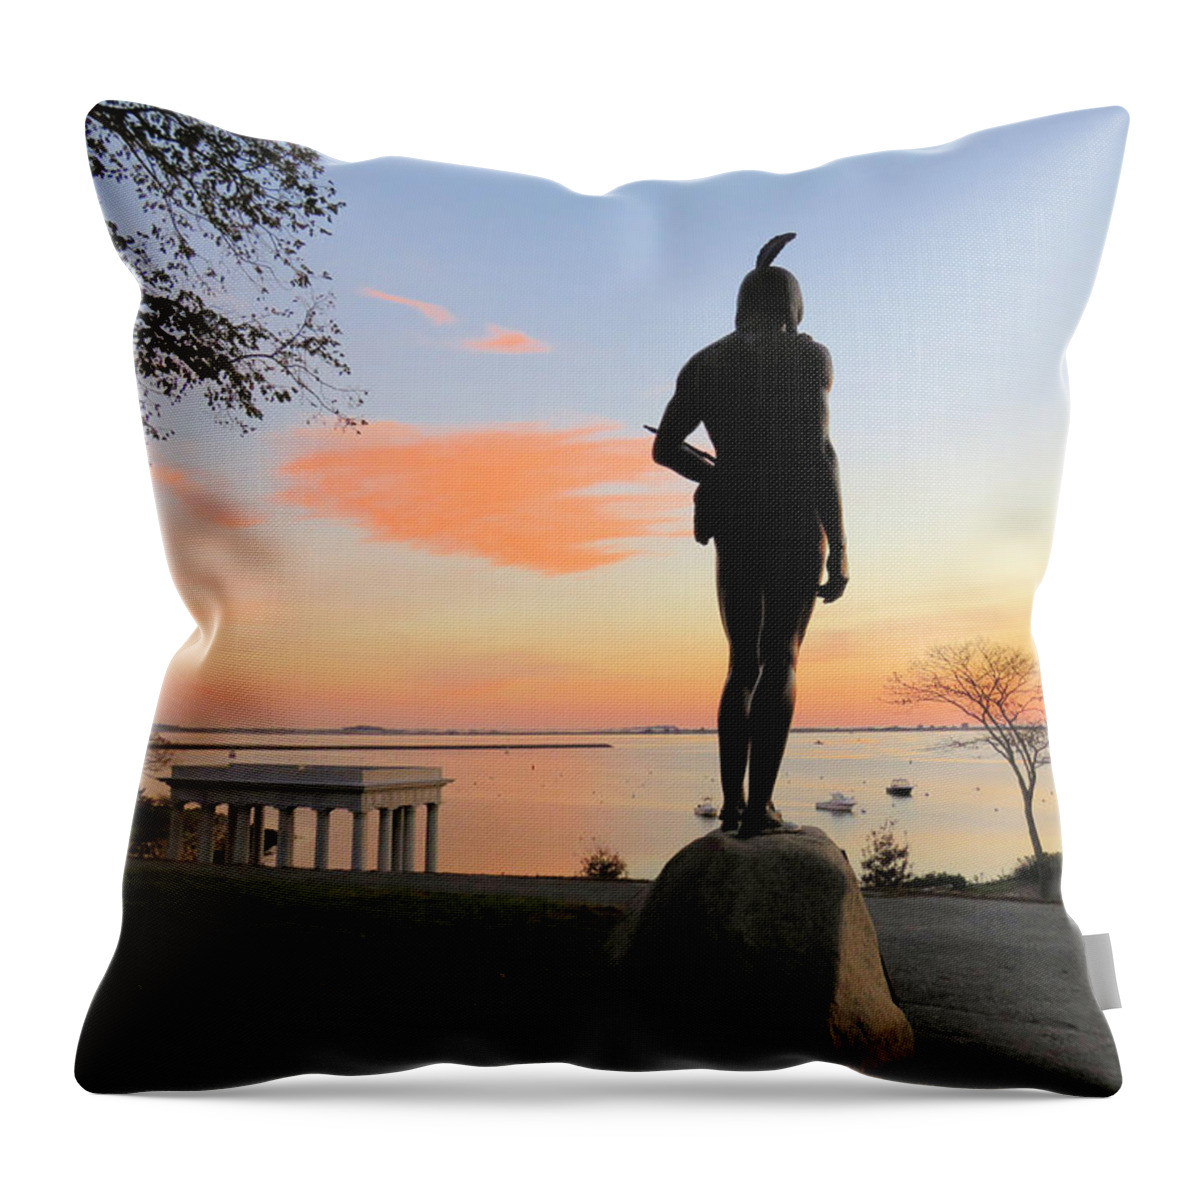 Massasoit Throw Pillow featuring the photograph Massasoit at Sunrise by Janice Drew